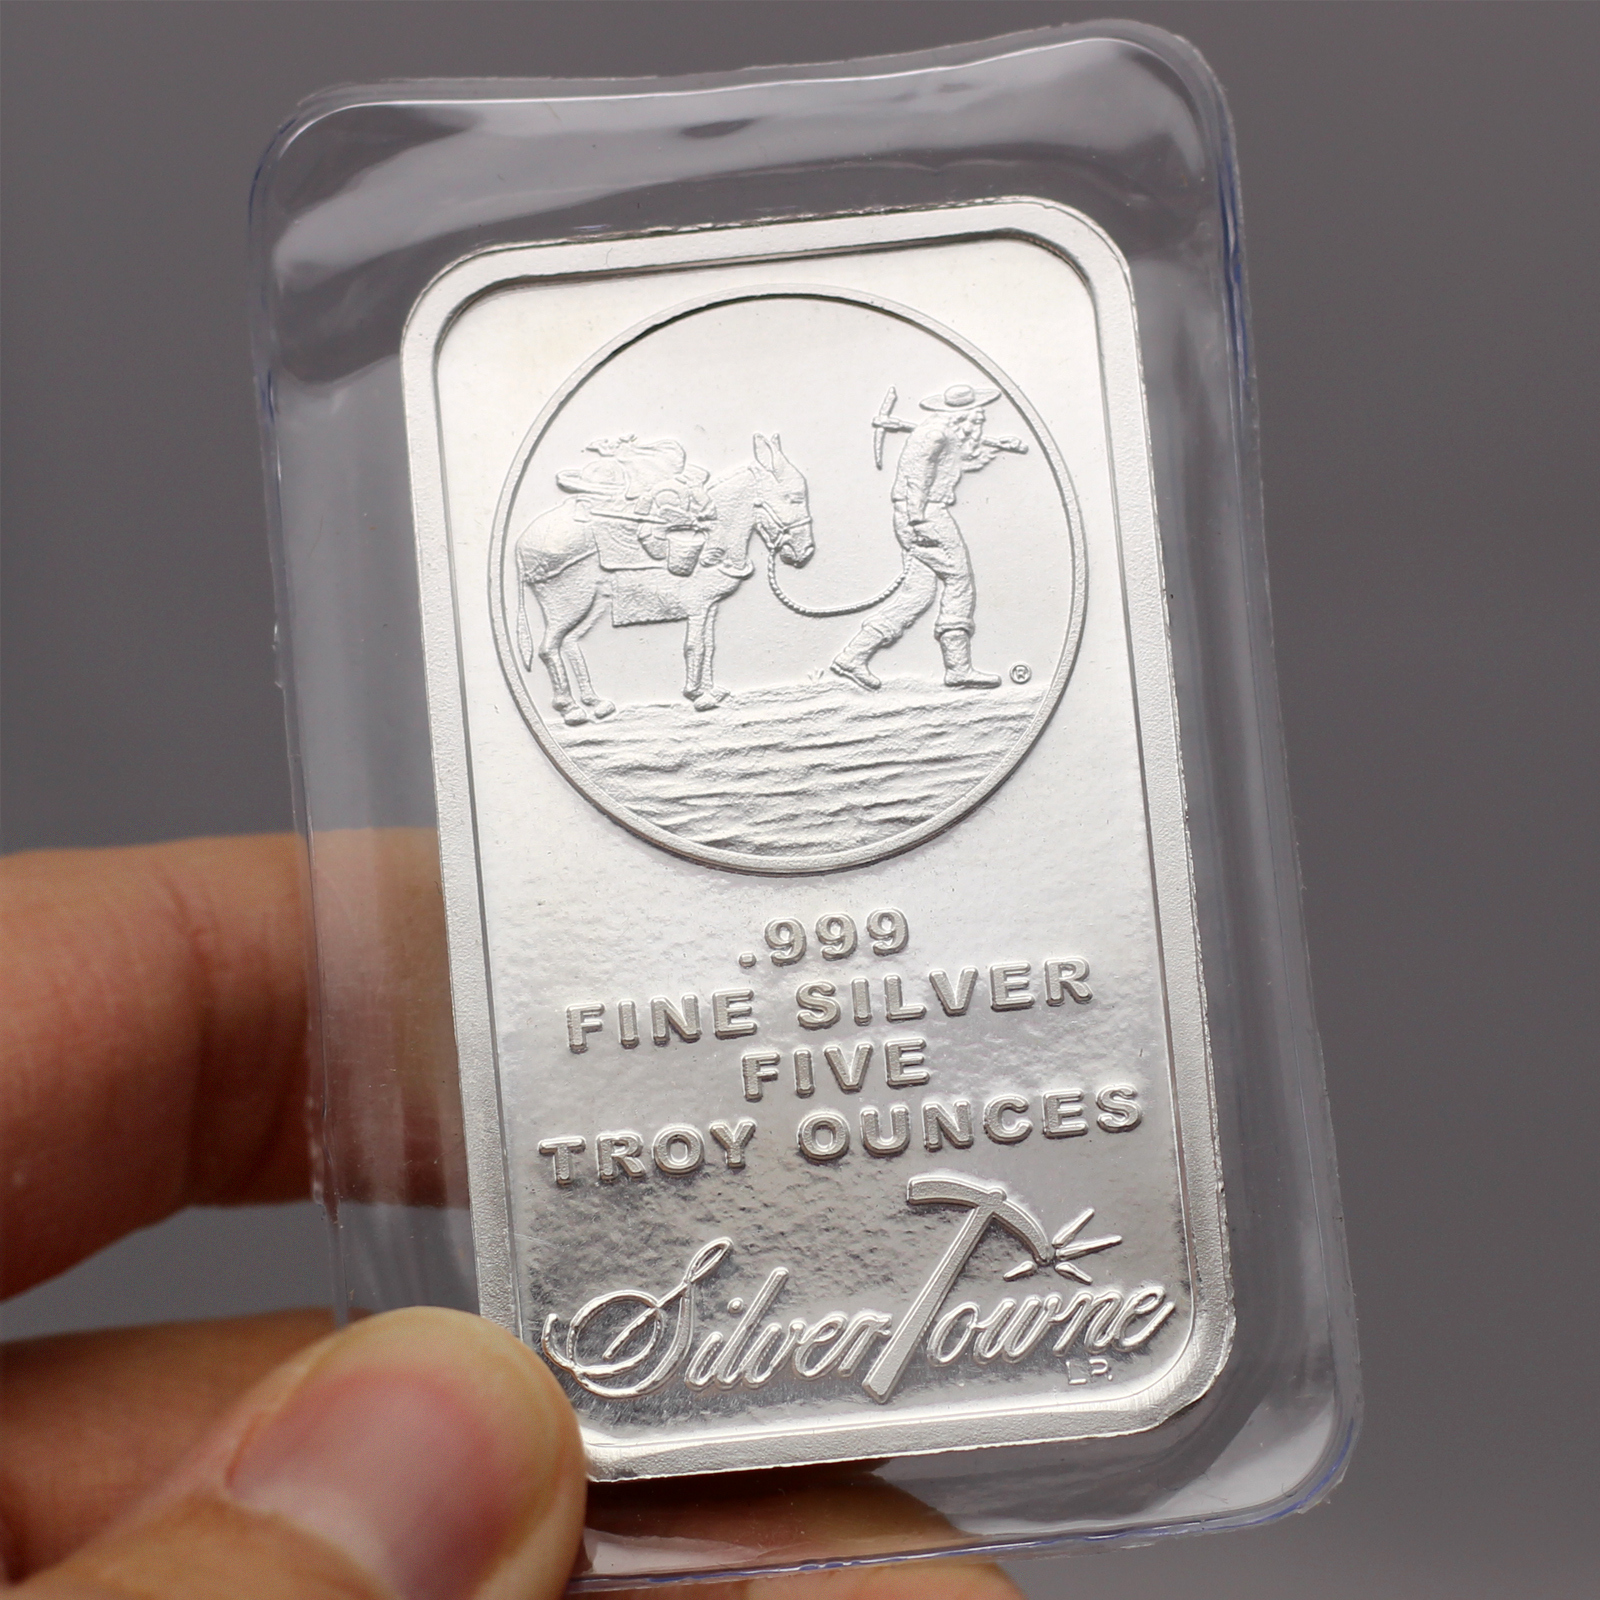 SilverTowne Logo 5oz .999 Fine Silver Bars 2 Piece Lot | eBay